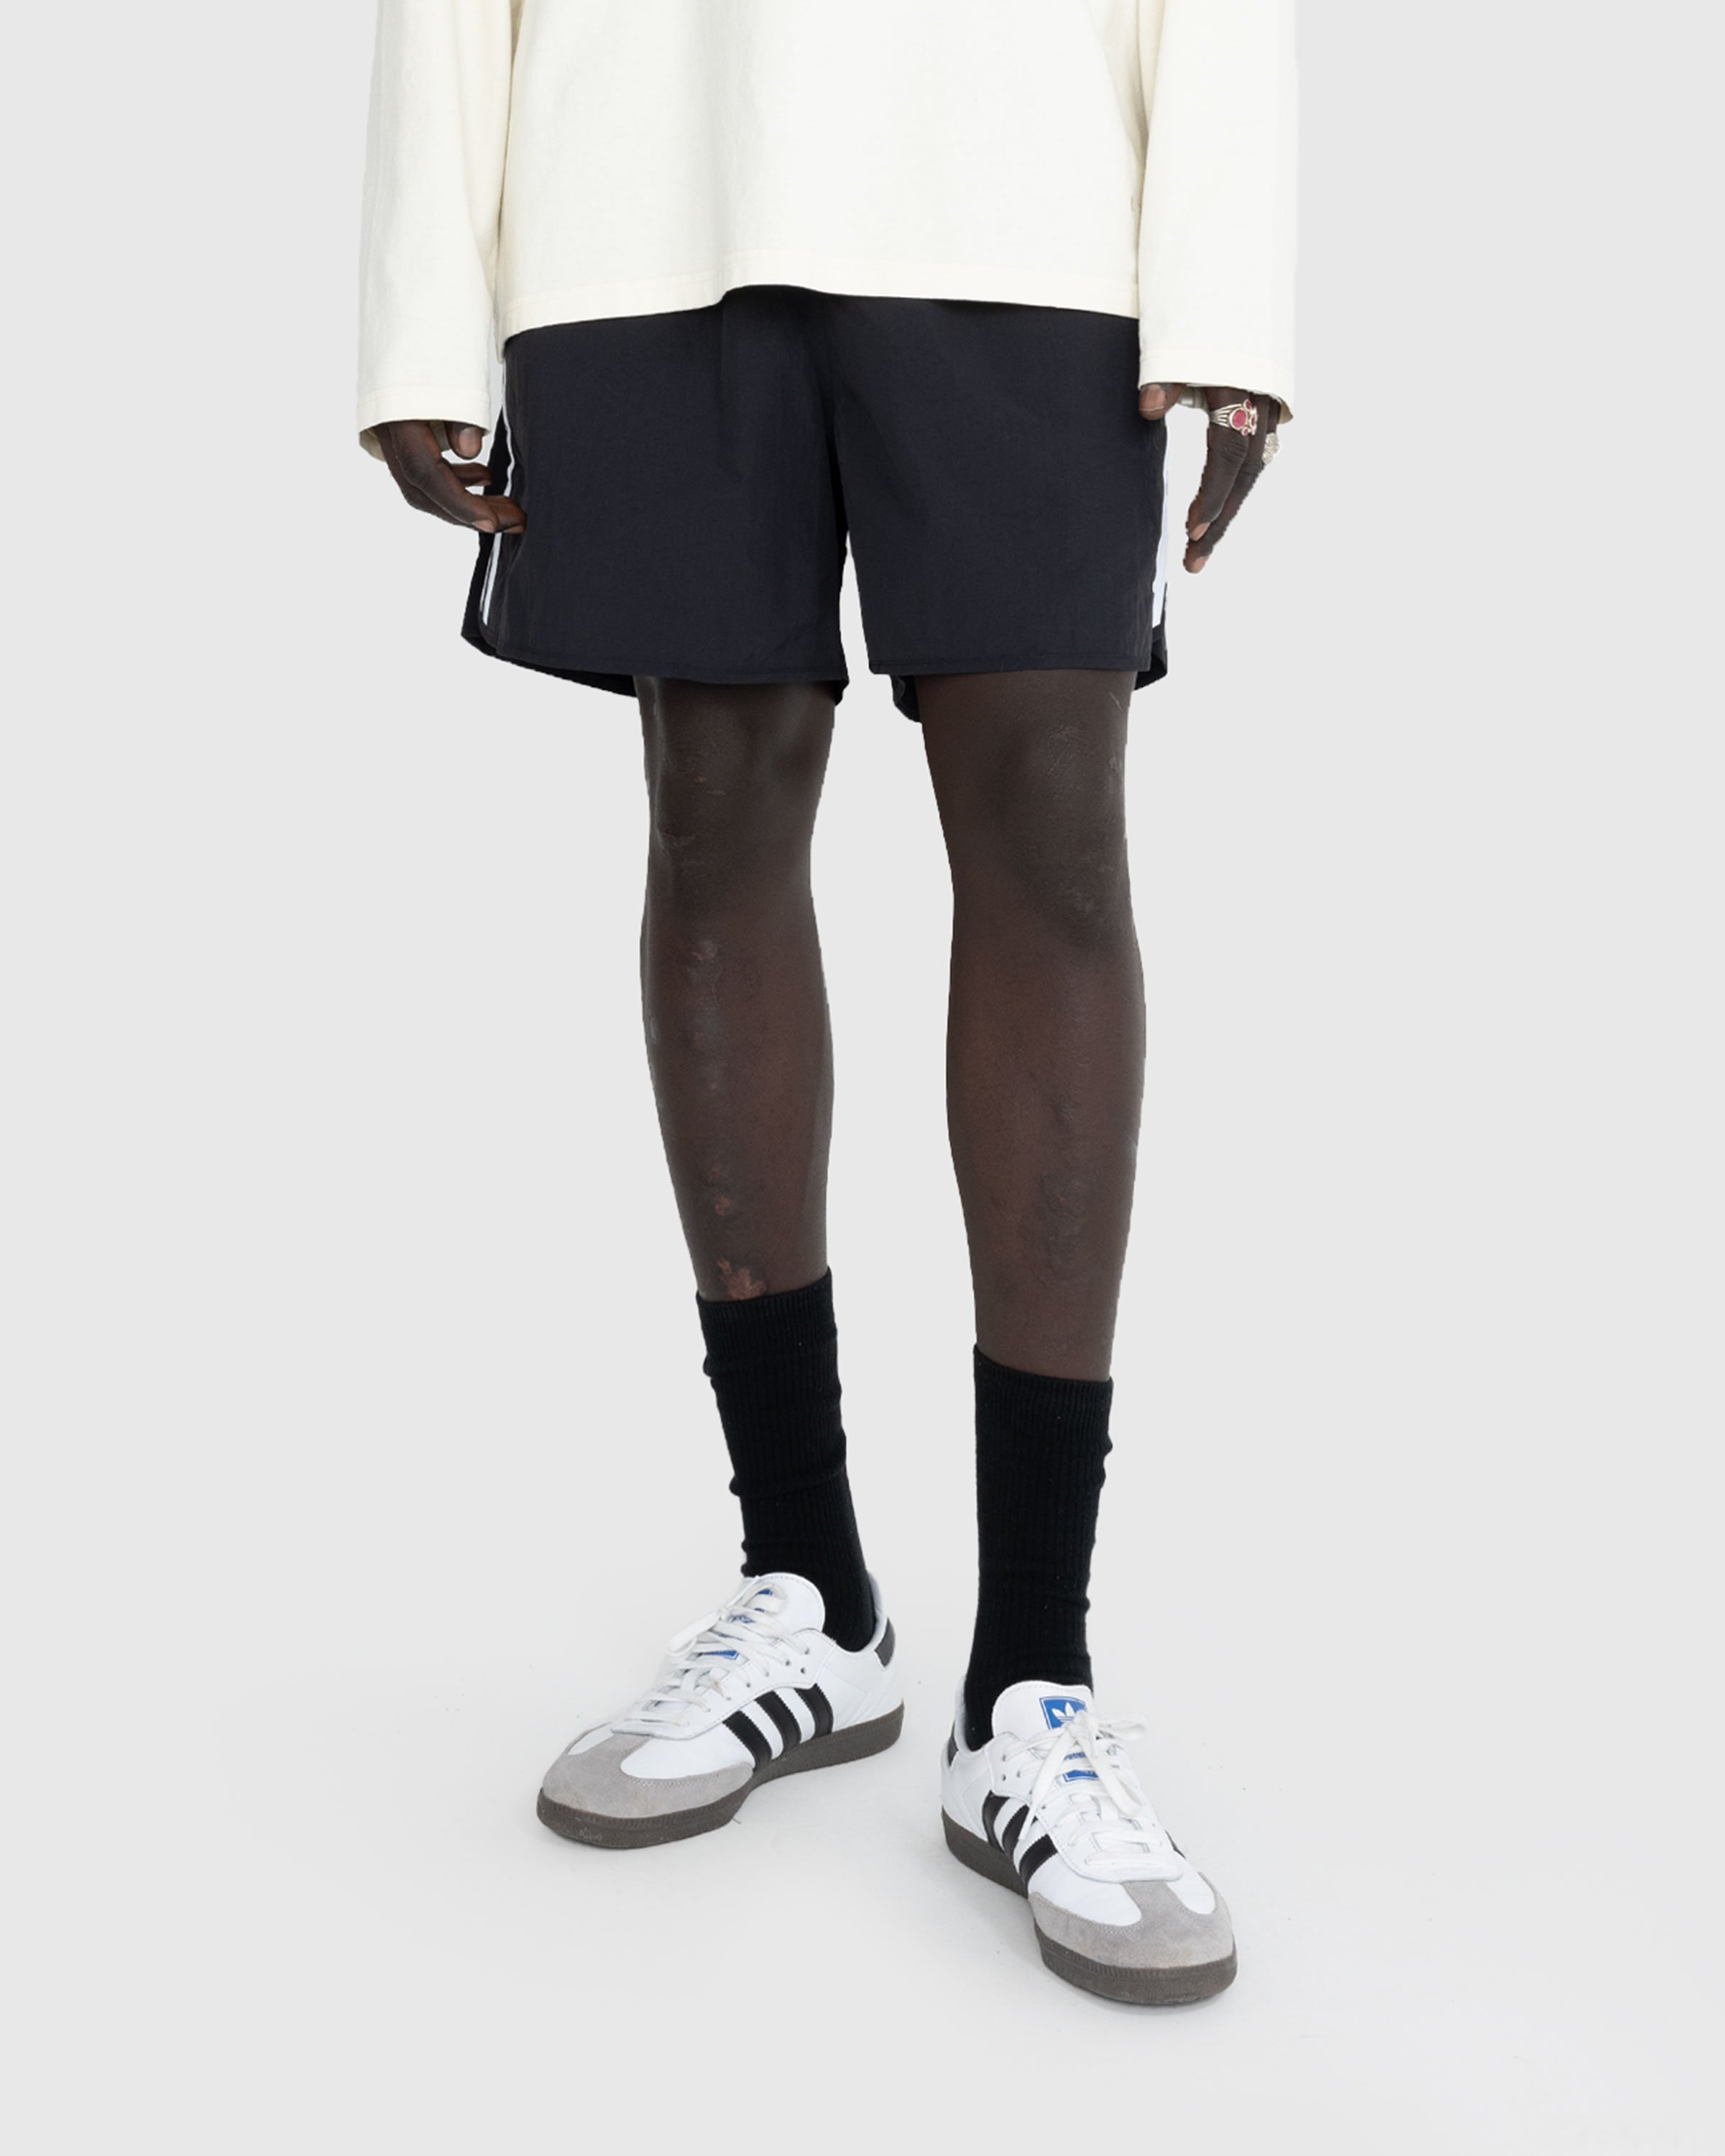 Adidas - SPRINTER SHORTS BLACK - Clothing - Black - Image 2